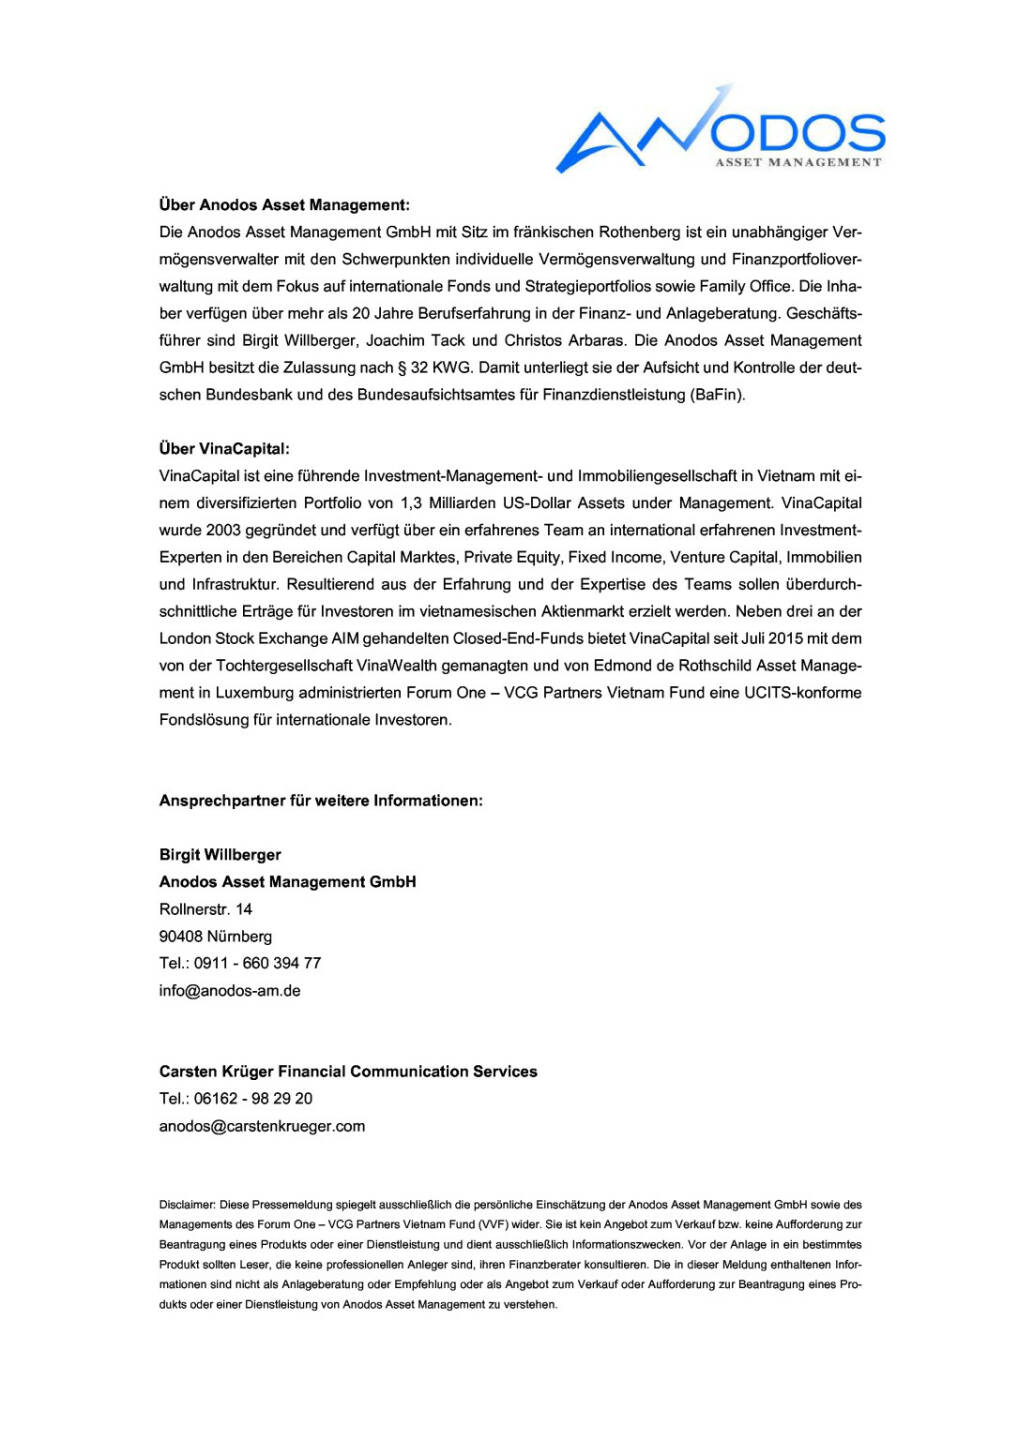 Anodos übernimmt Vertriebskoordination für Vietnam-Aktienfonds, Seite 3/3, komplettes Dokument unter http://boerse-social.com/static/uploads/file_365_anodos_übernimmt_vertriebskoordination_fur_vietnam-aktienfonds.pdf